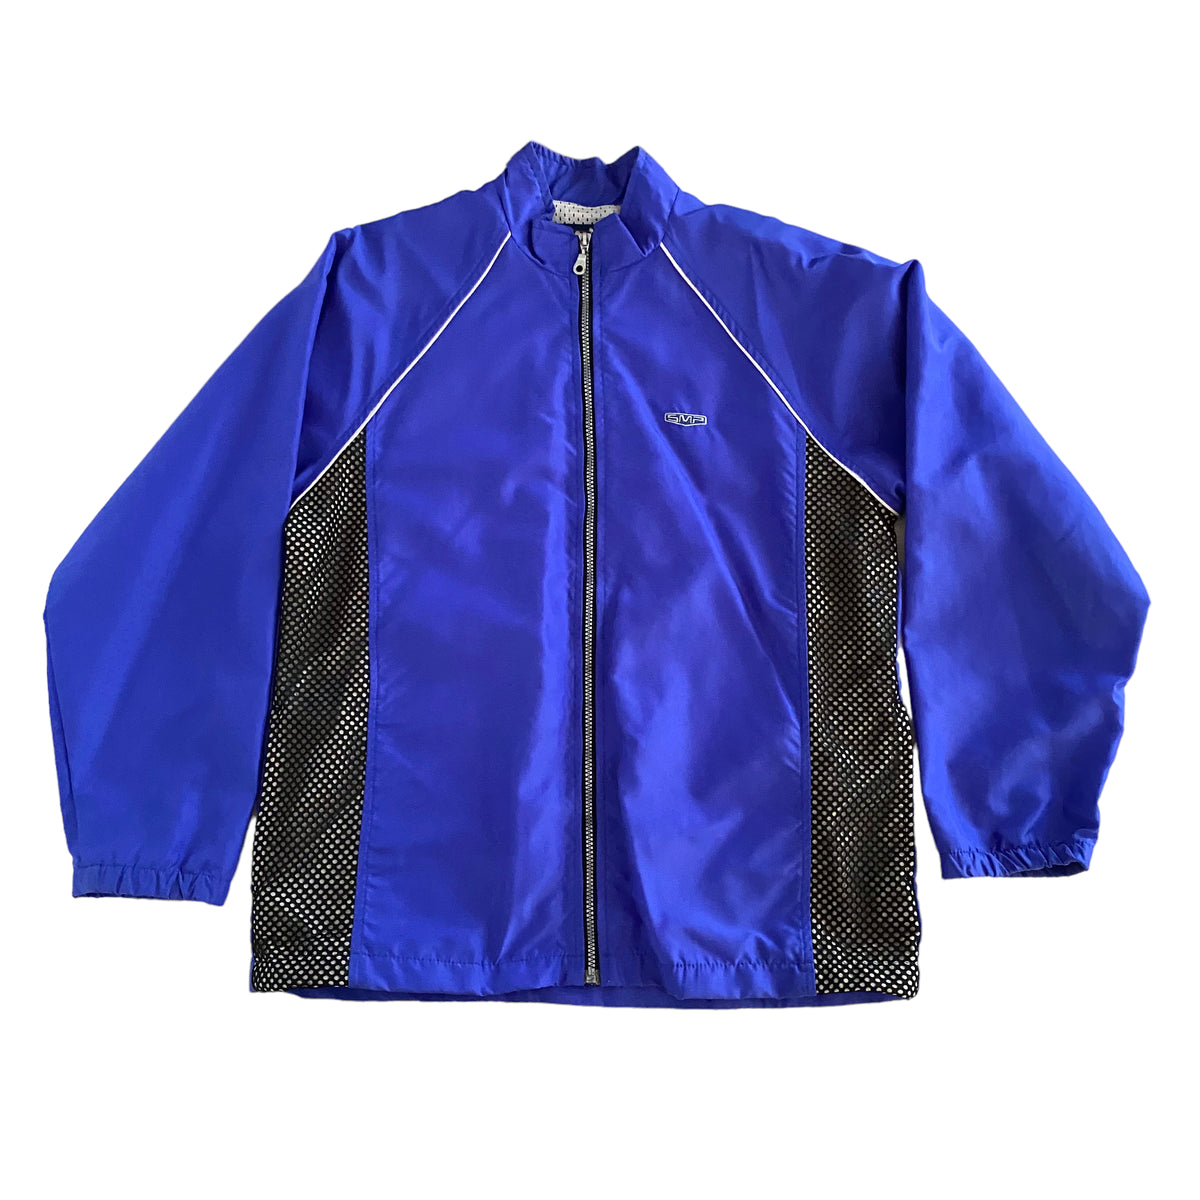 SMP Clothing Windbreaker Full Zip Jacket Mens Small